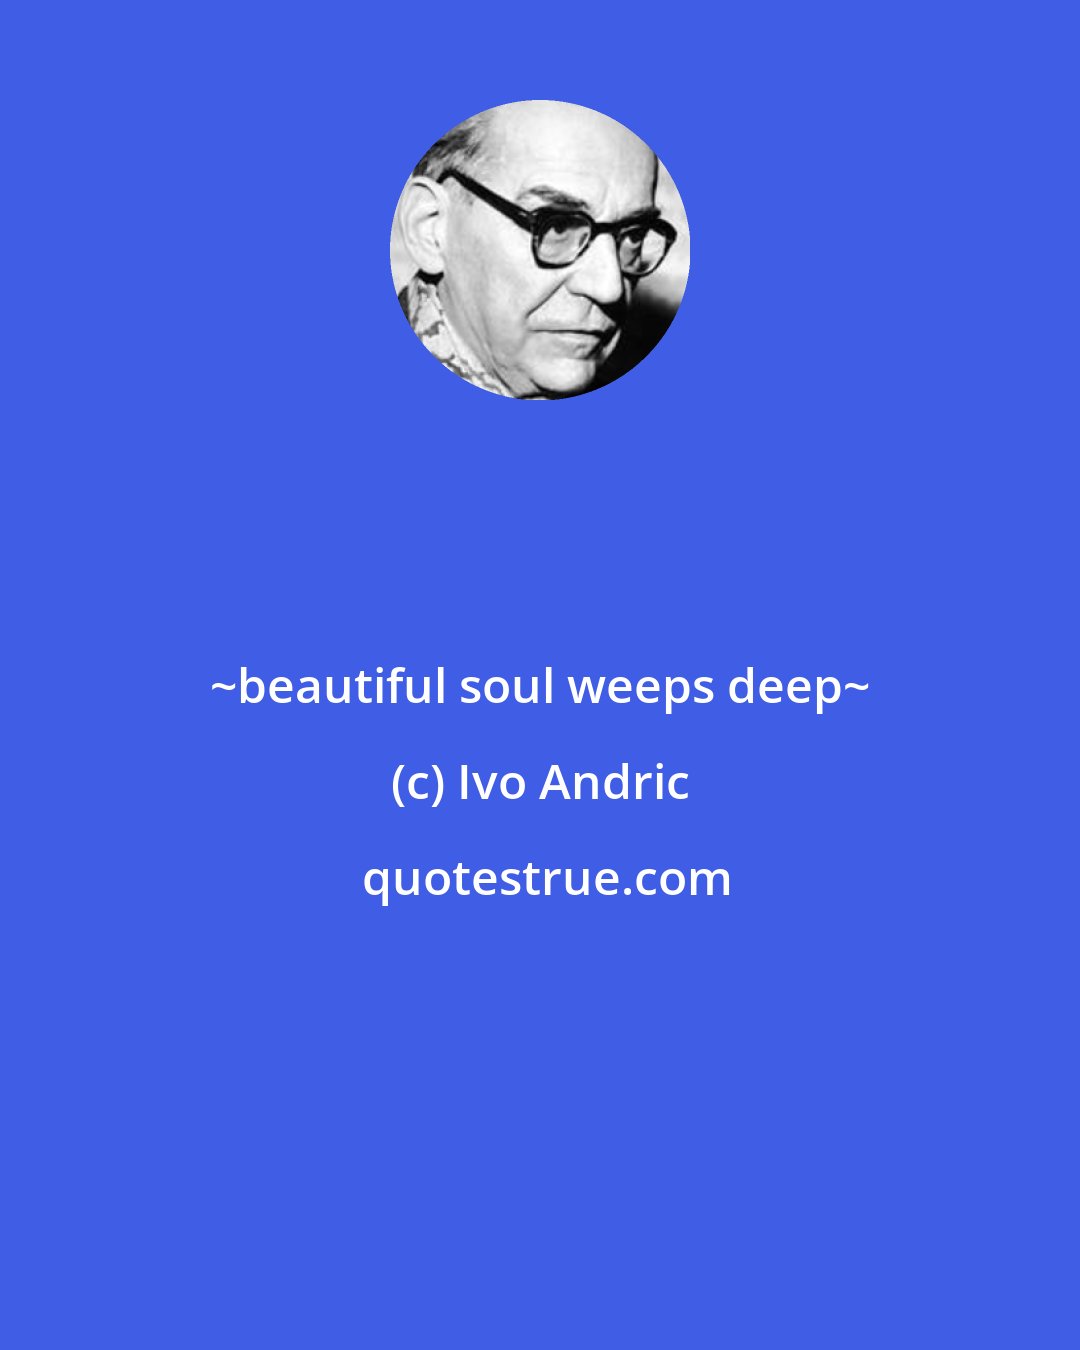 Ivo Andric: ~beautiful soul weeps deep~